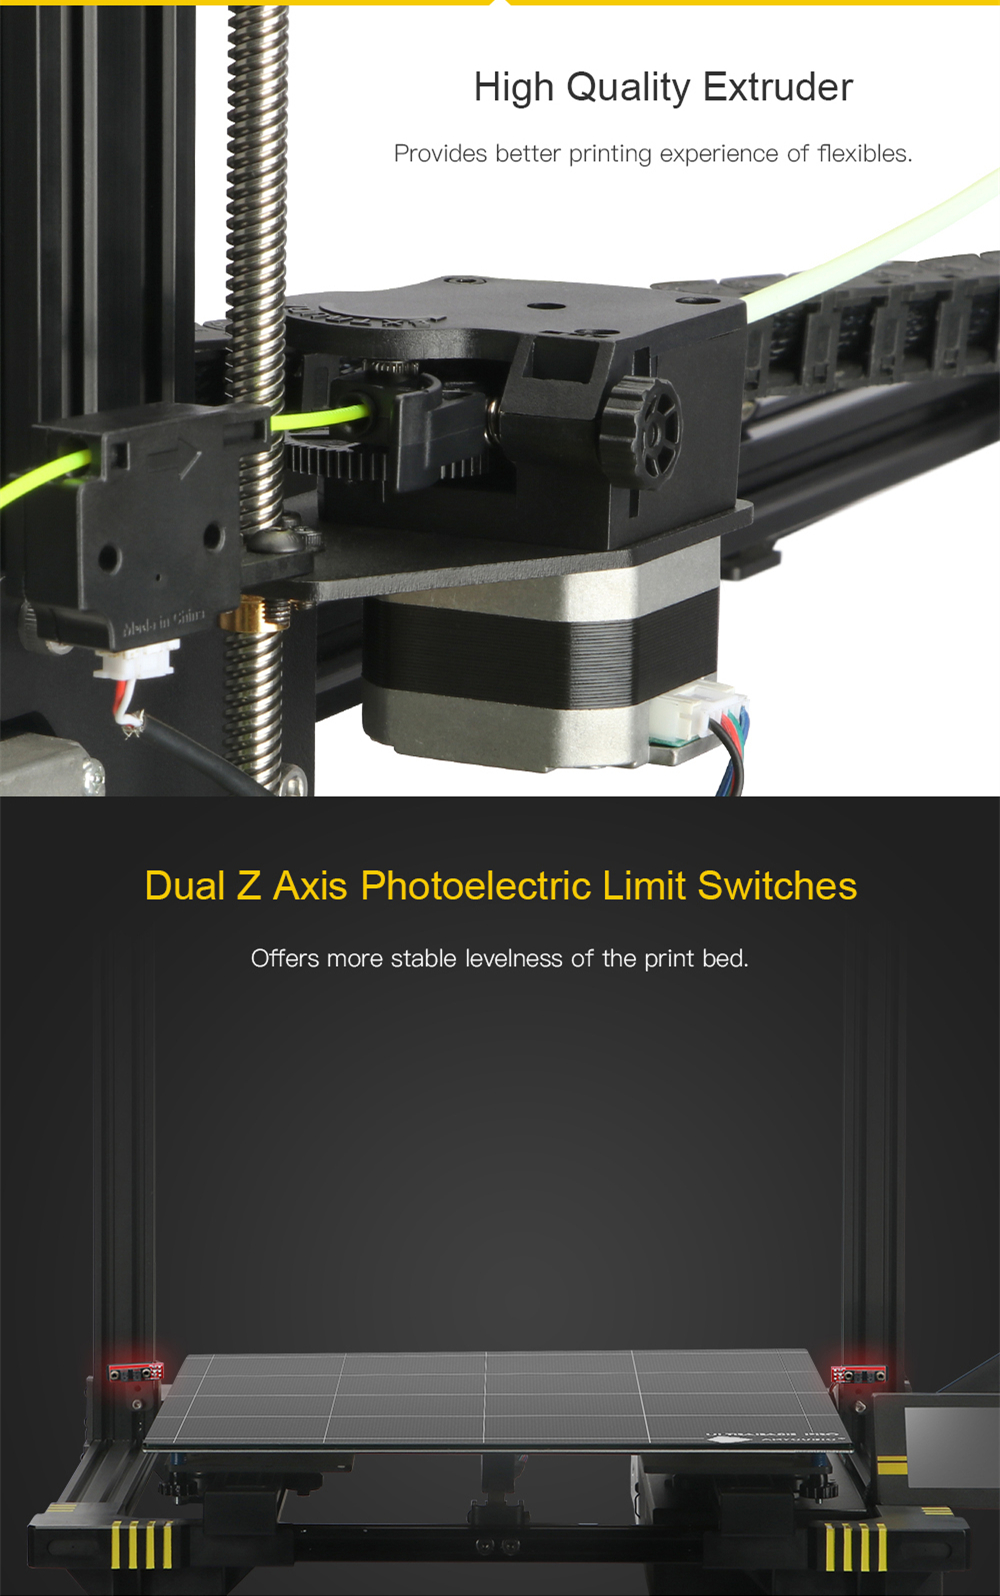 Anycubicreg-Chiron-3D-Printer-400400450mm-Printing-Size-With-Matrix-Automatic-LevelingUltrabase-Pro--1365815